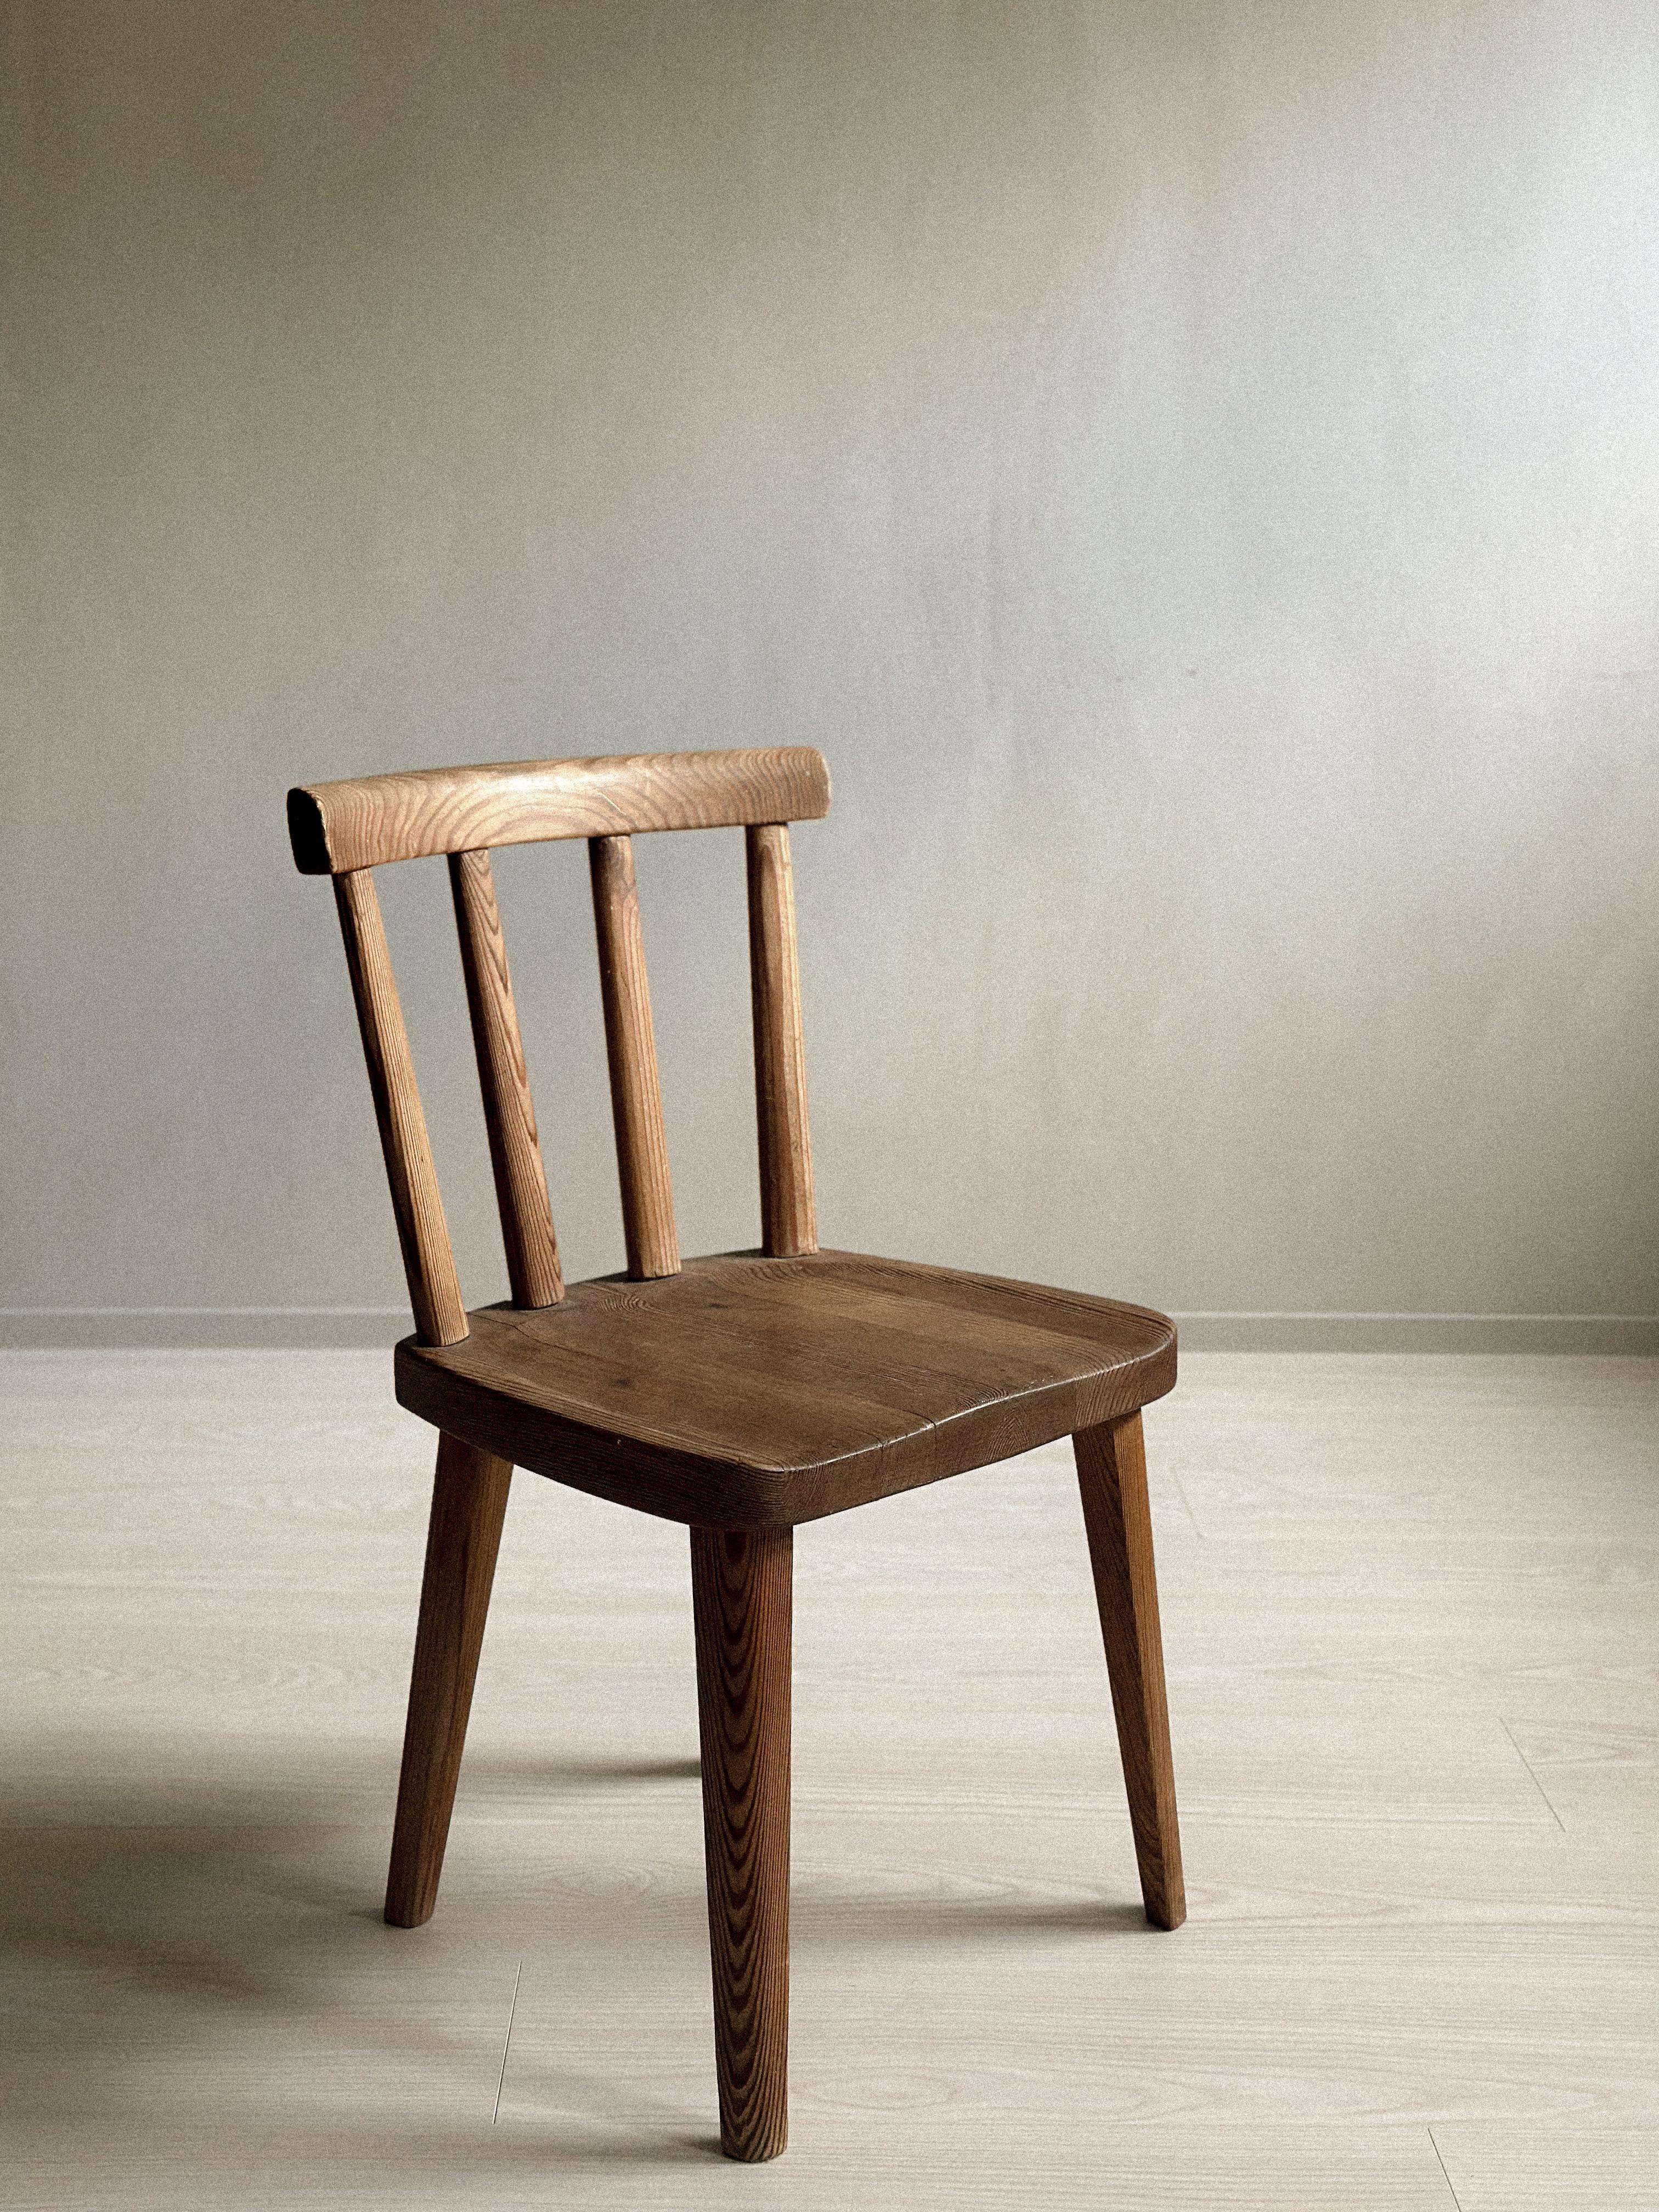 Pine A single Utö Dining Chair by Axel Einar Hjorth for Nordiska Kompaniet, 1930s For Sale